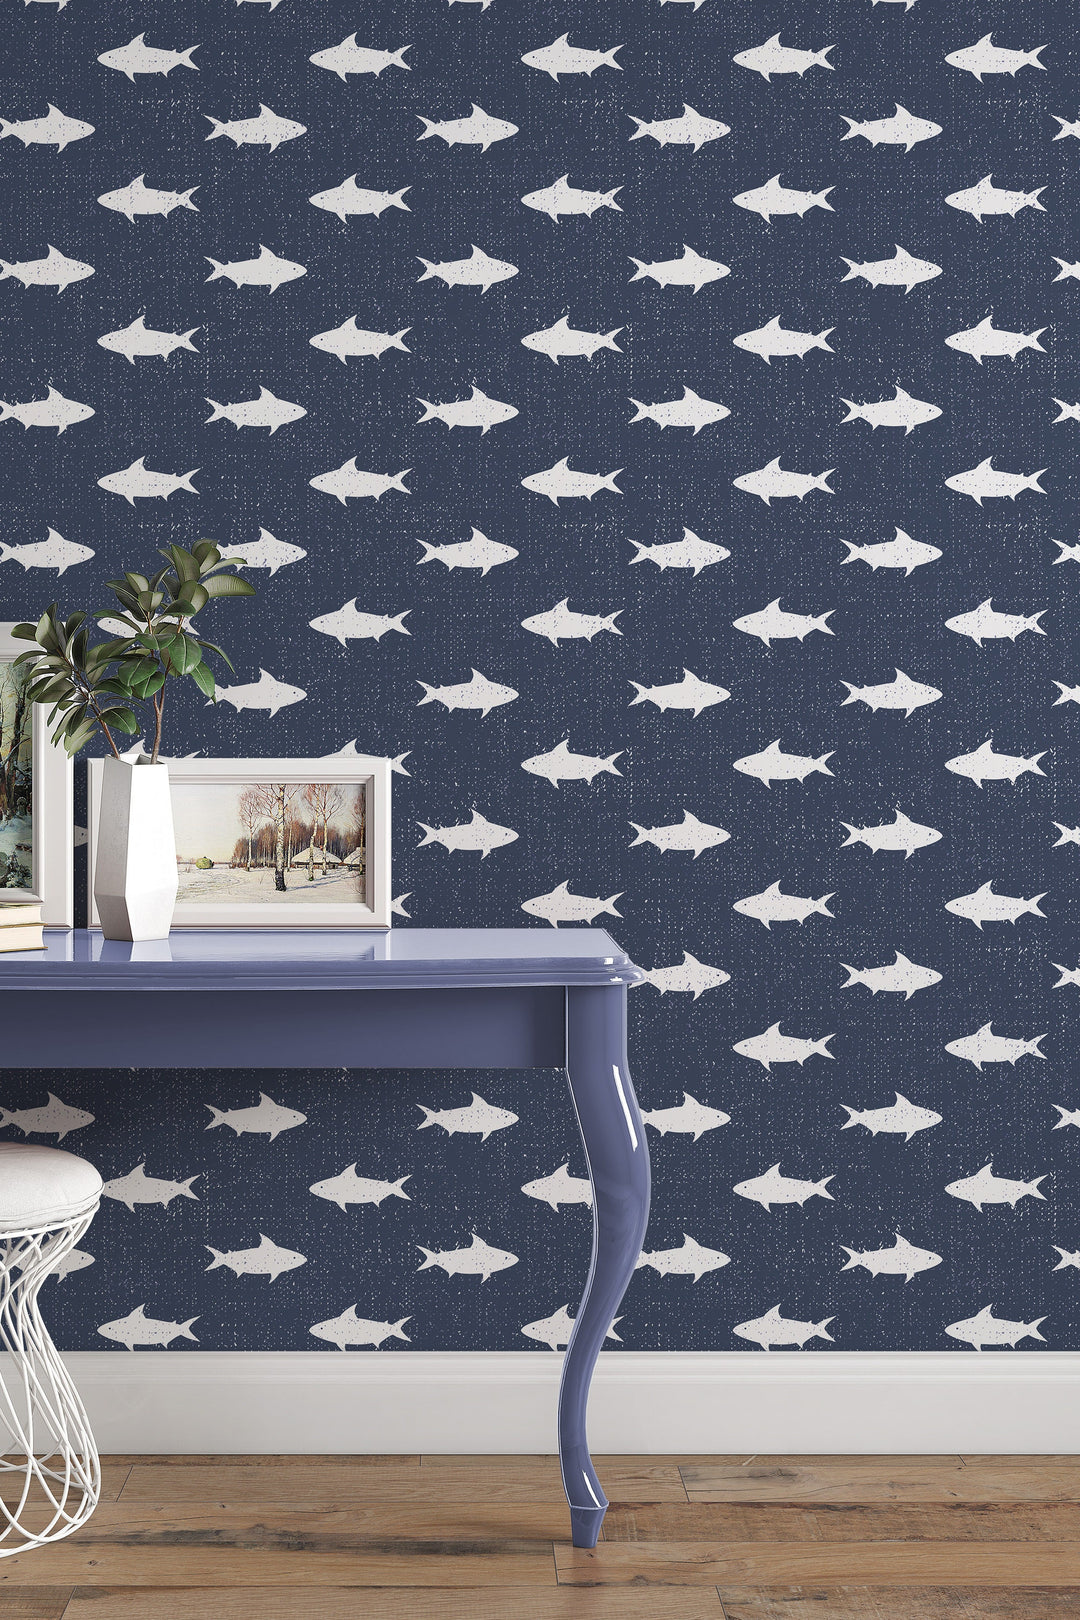 Fish, shark wallpaper, sea life wallpaper #3431